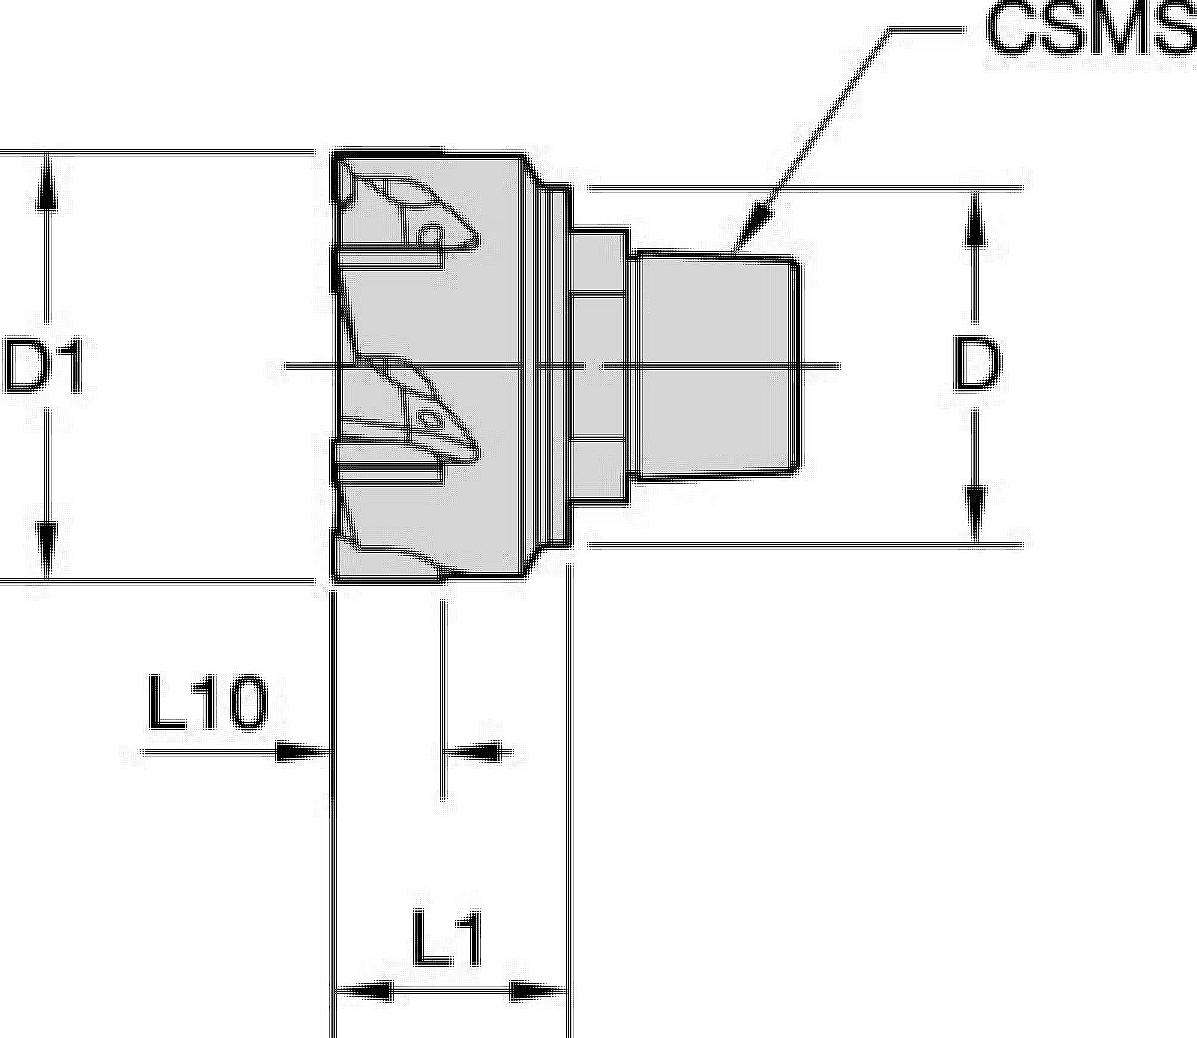 PCD Modular Reamer • R420 • Internal Coolant